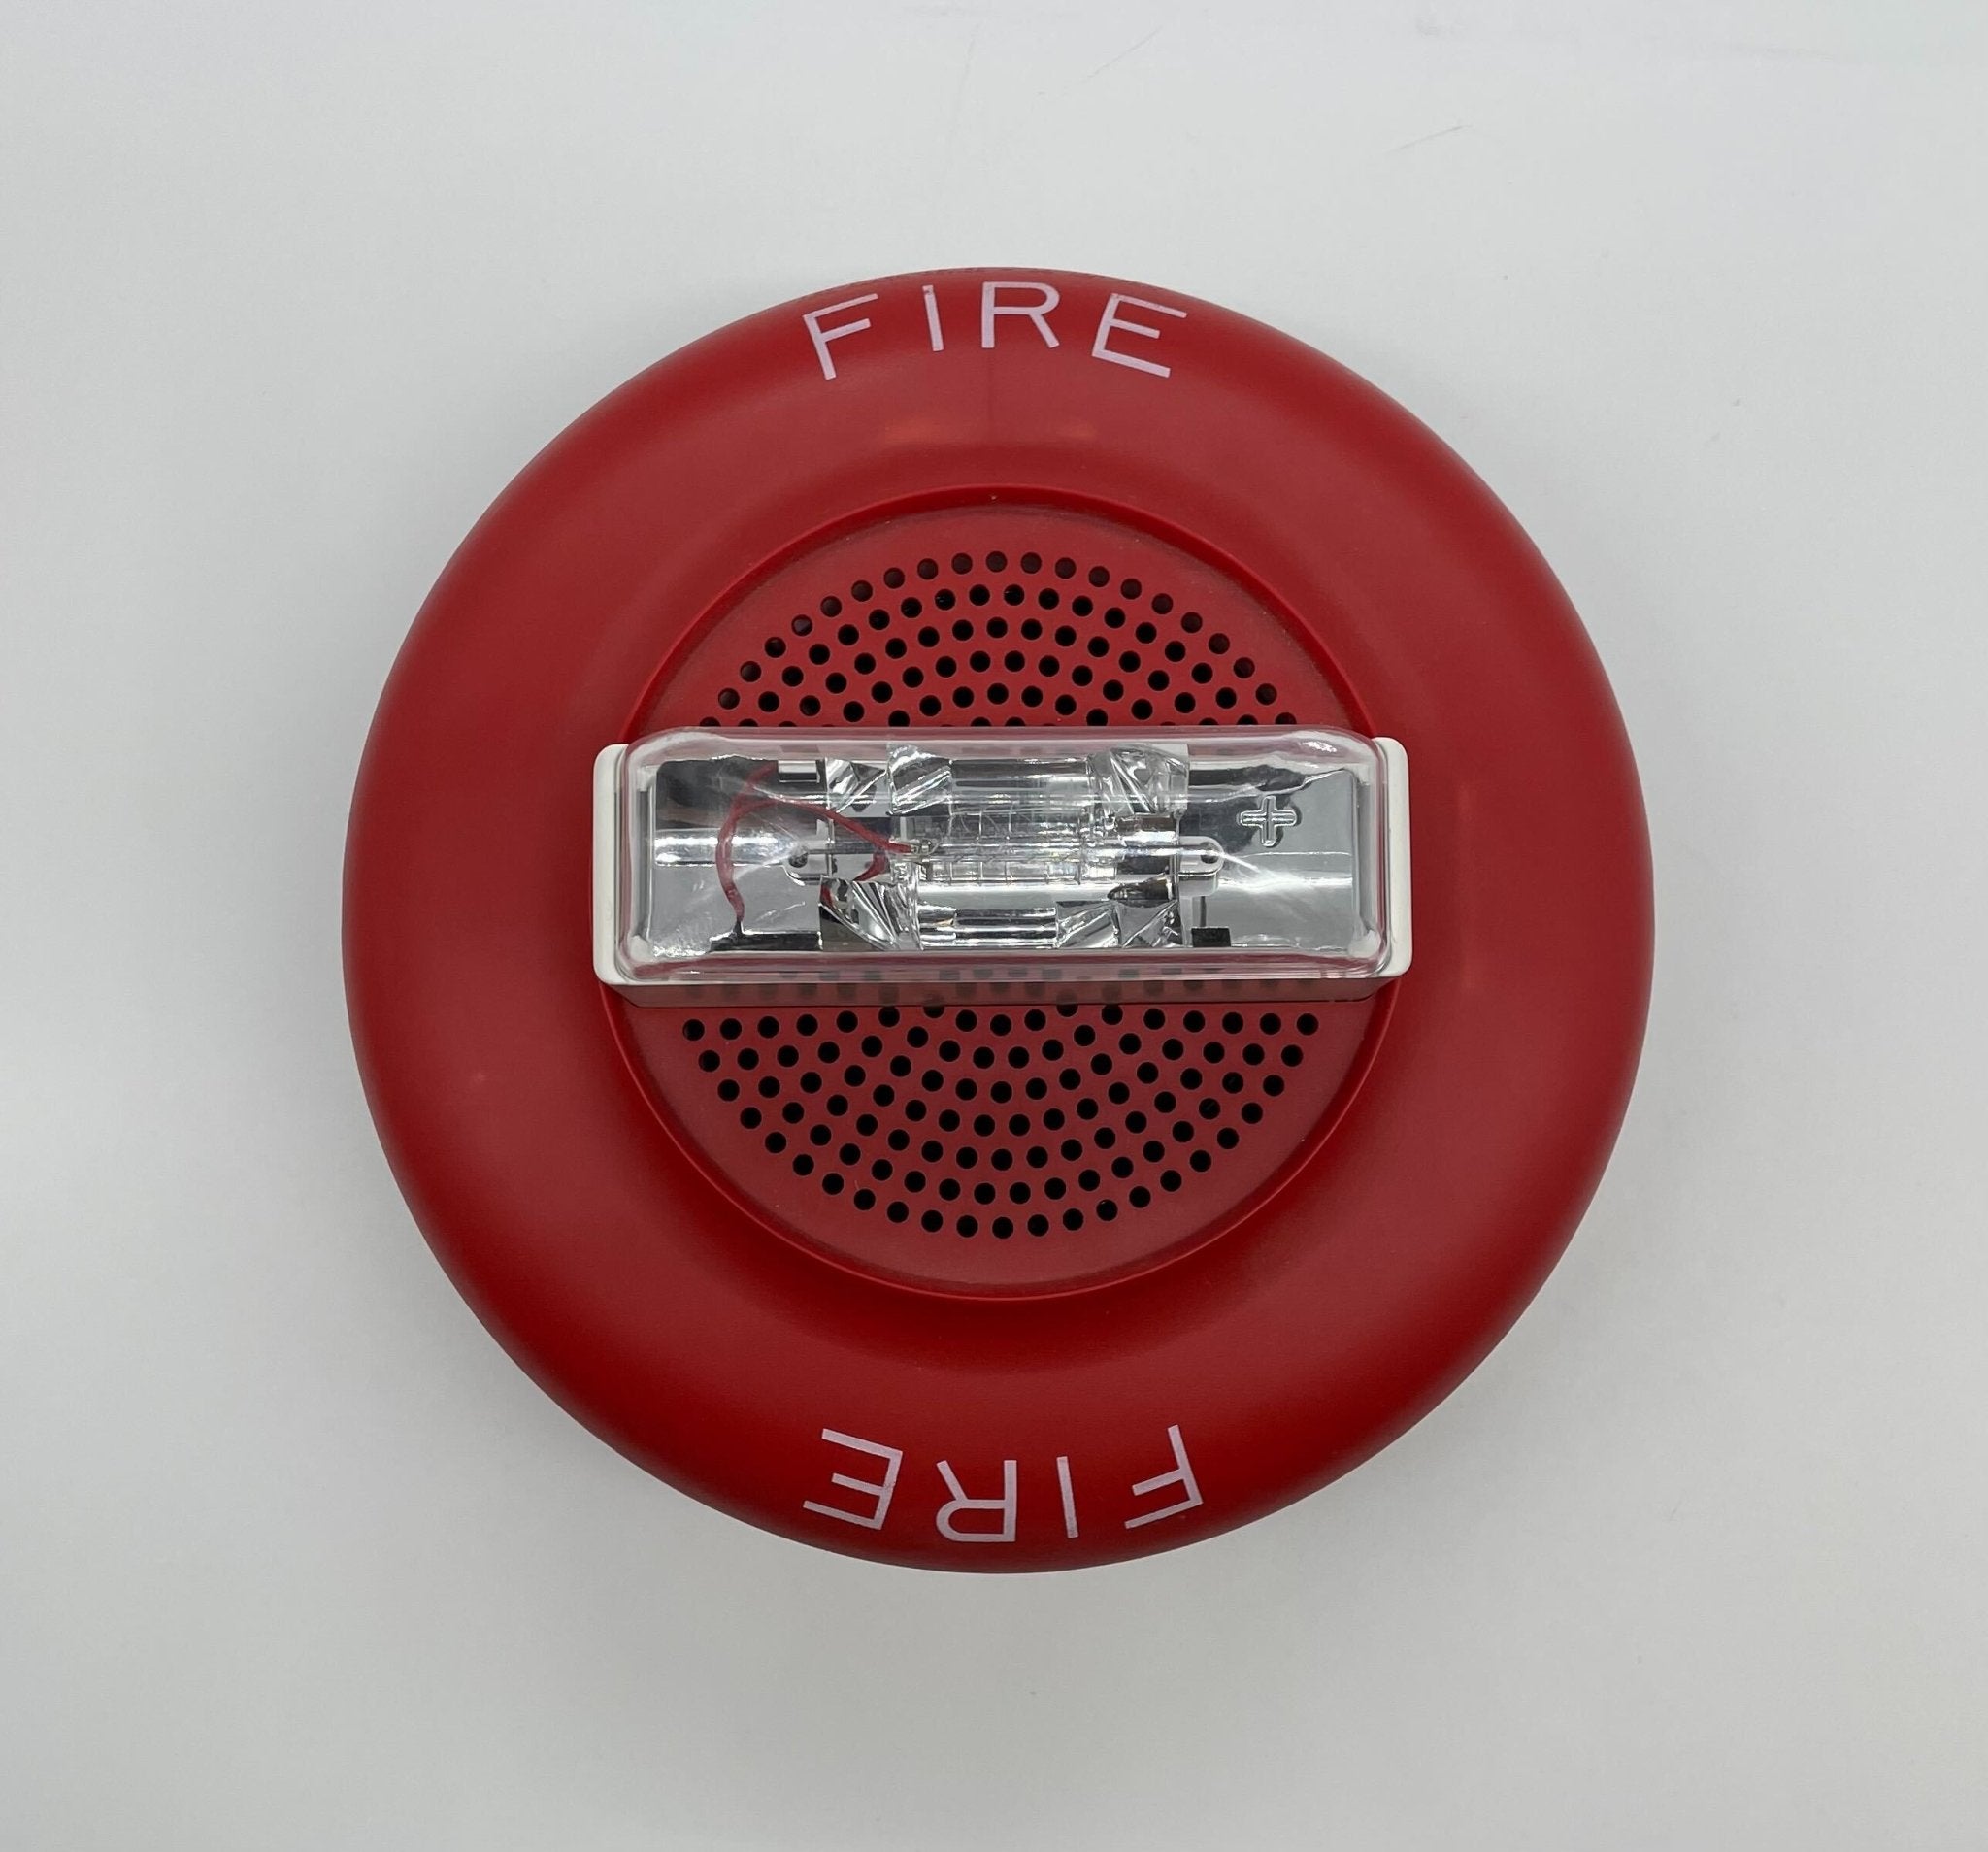 Wheelock E60-24MCC-FR - The Fire Alarm Supplier